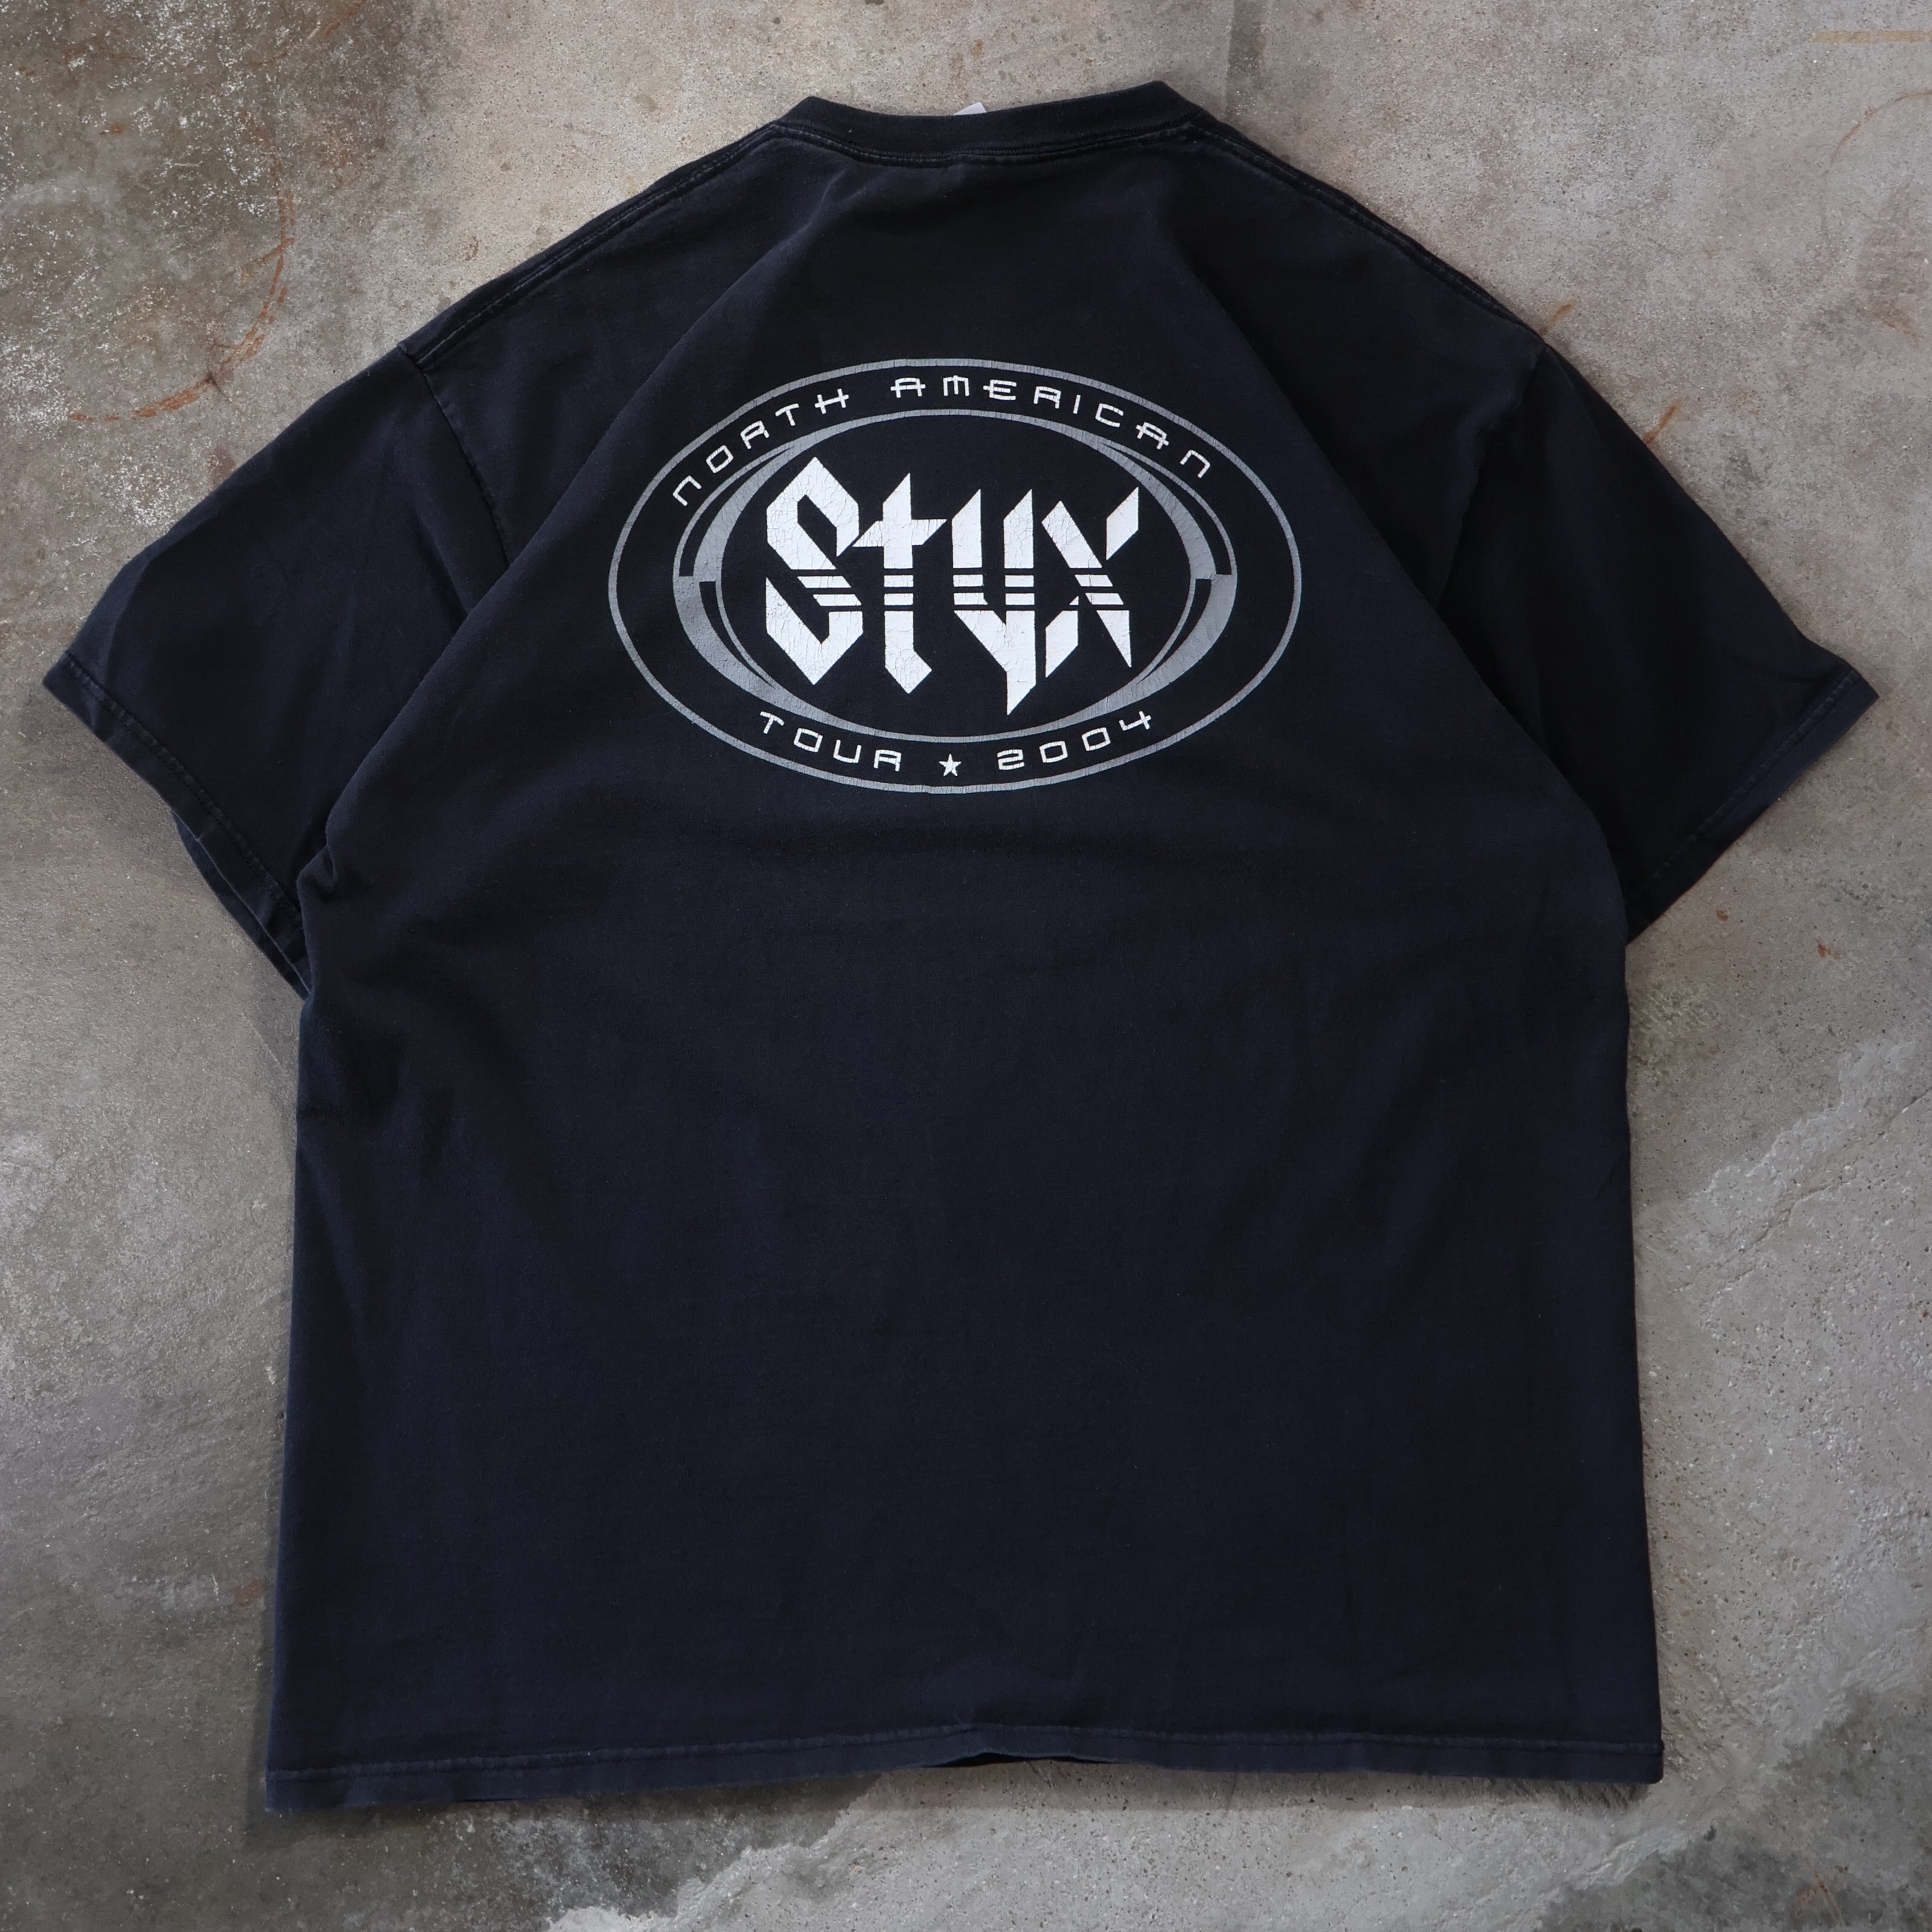 Styx 2004 North American Tour T-Shirt (XL)